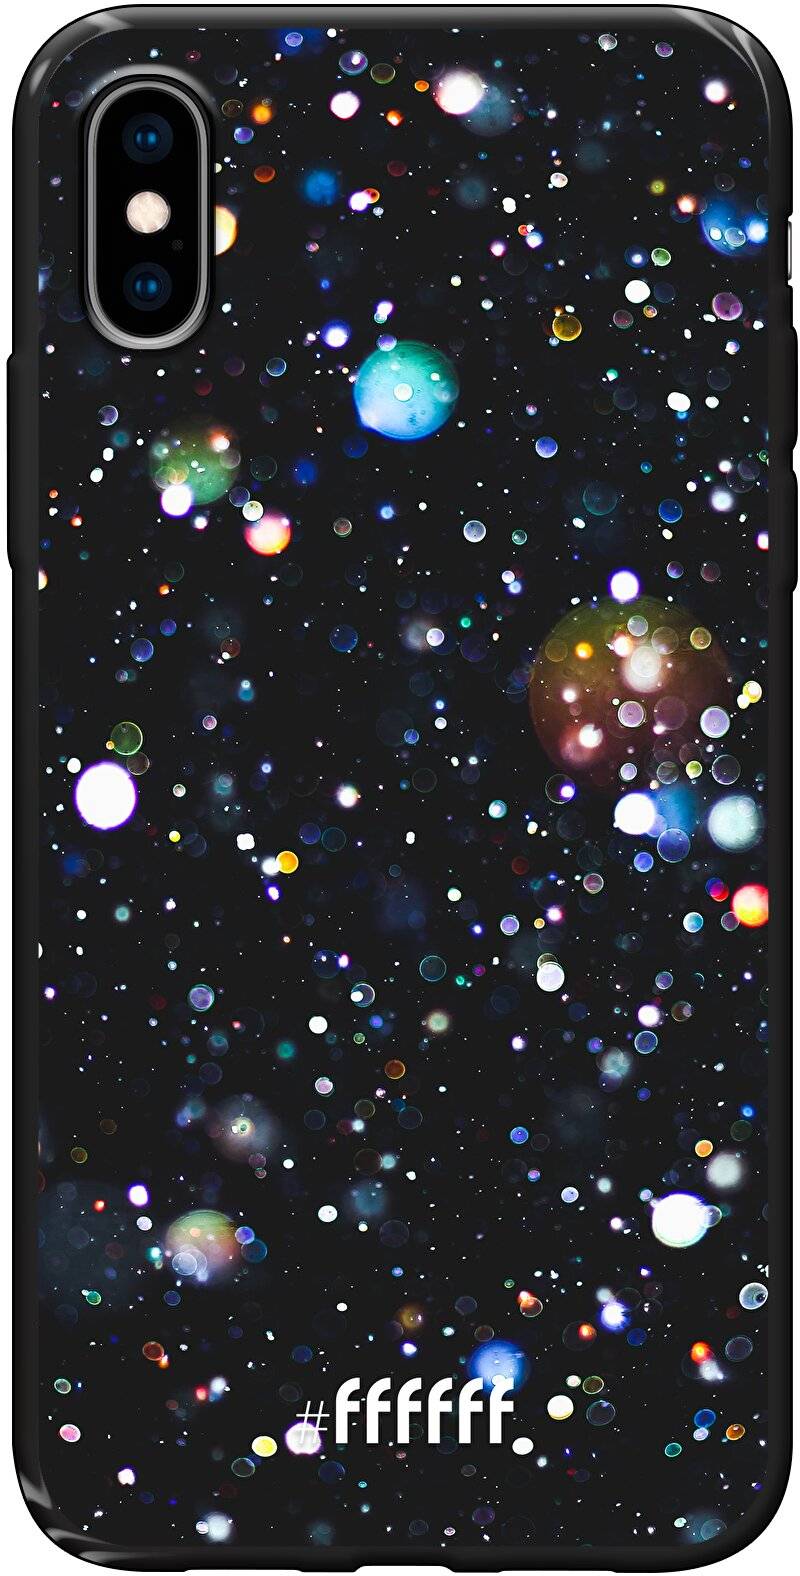 Galactic Bokeh iPhone X